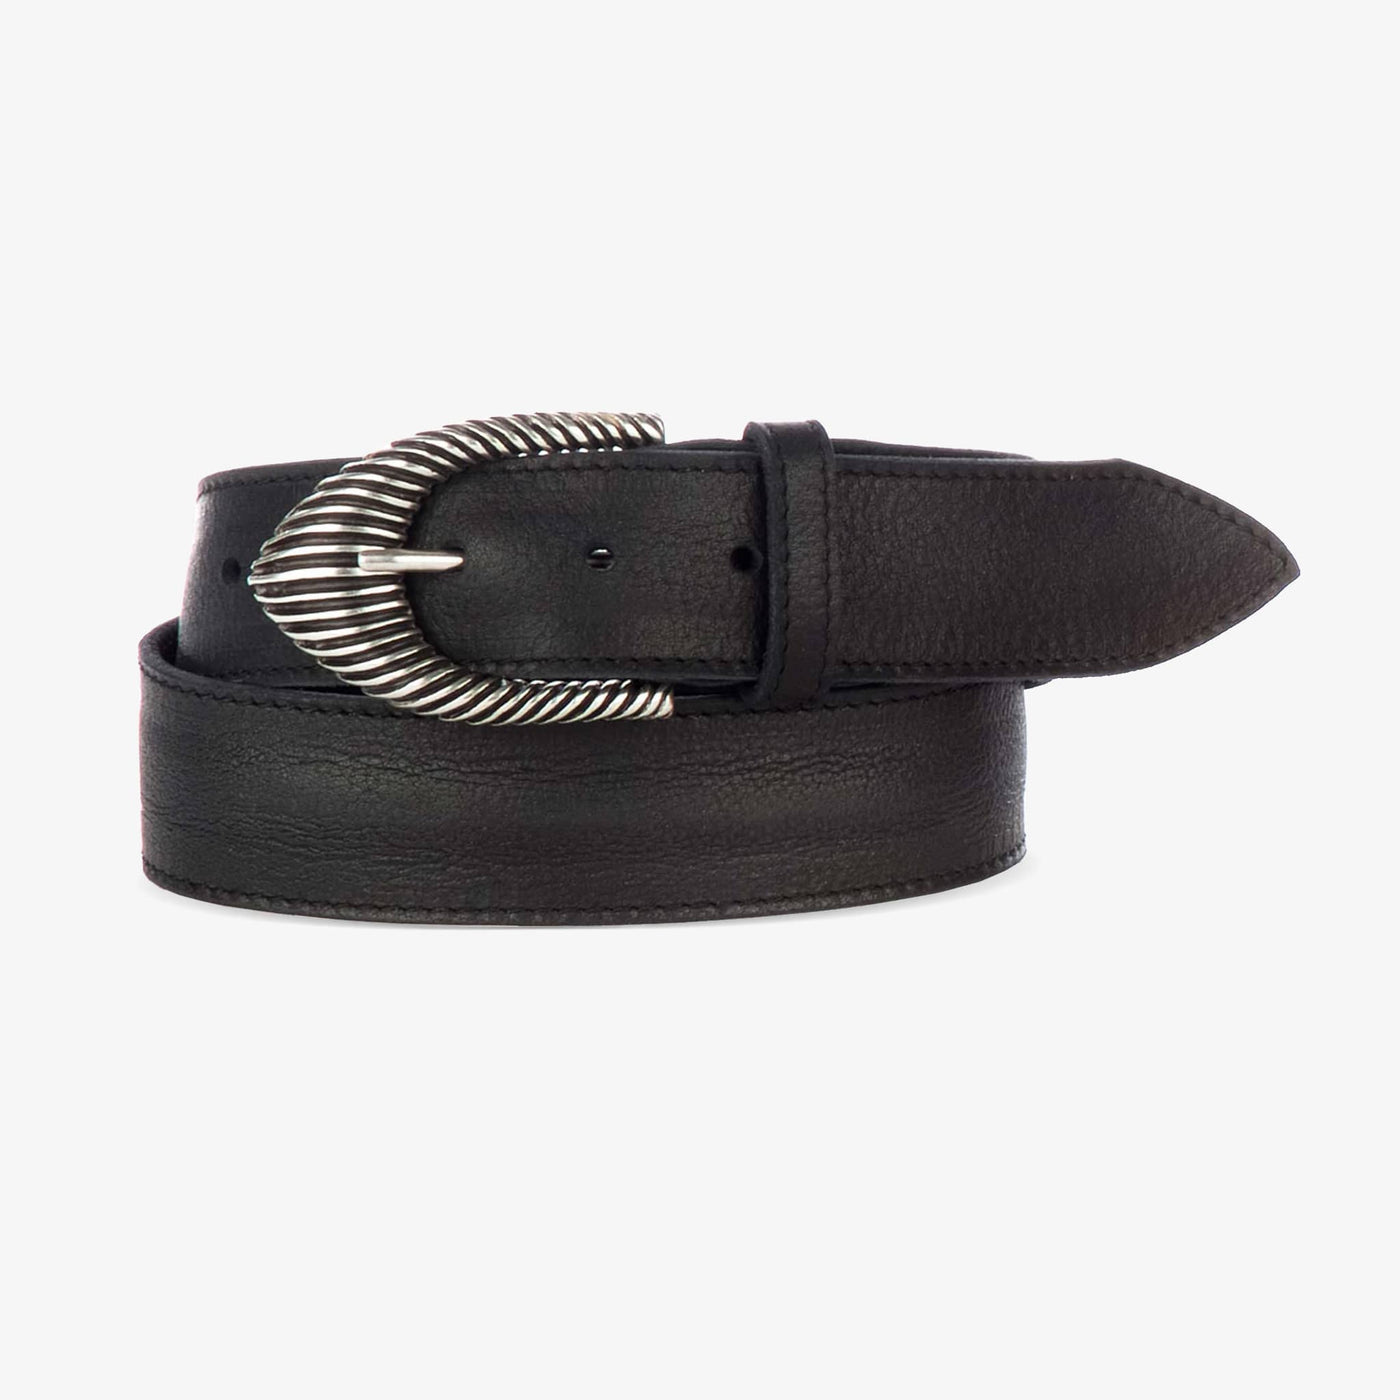 Vilas Sasquatch BRAVE Leather Belt